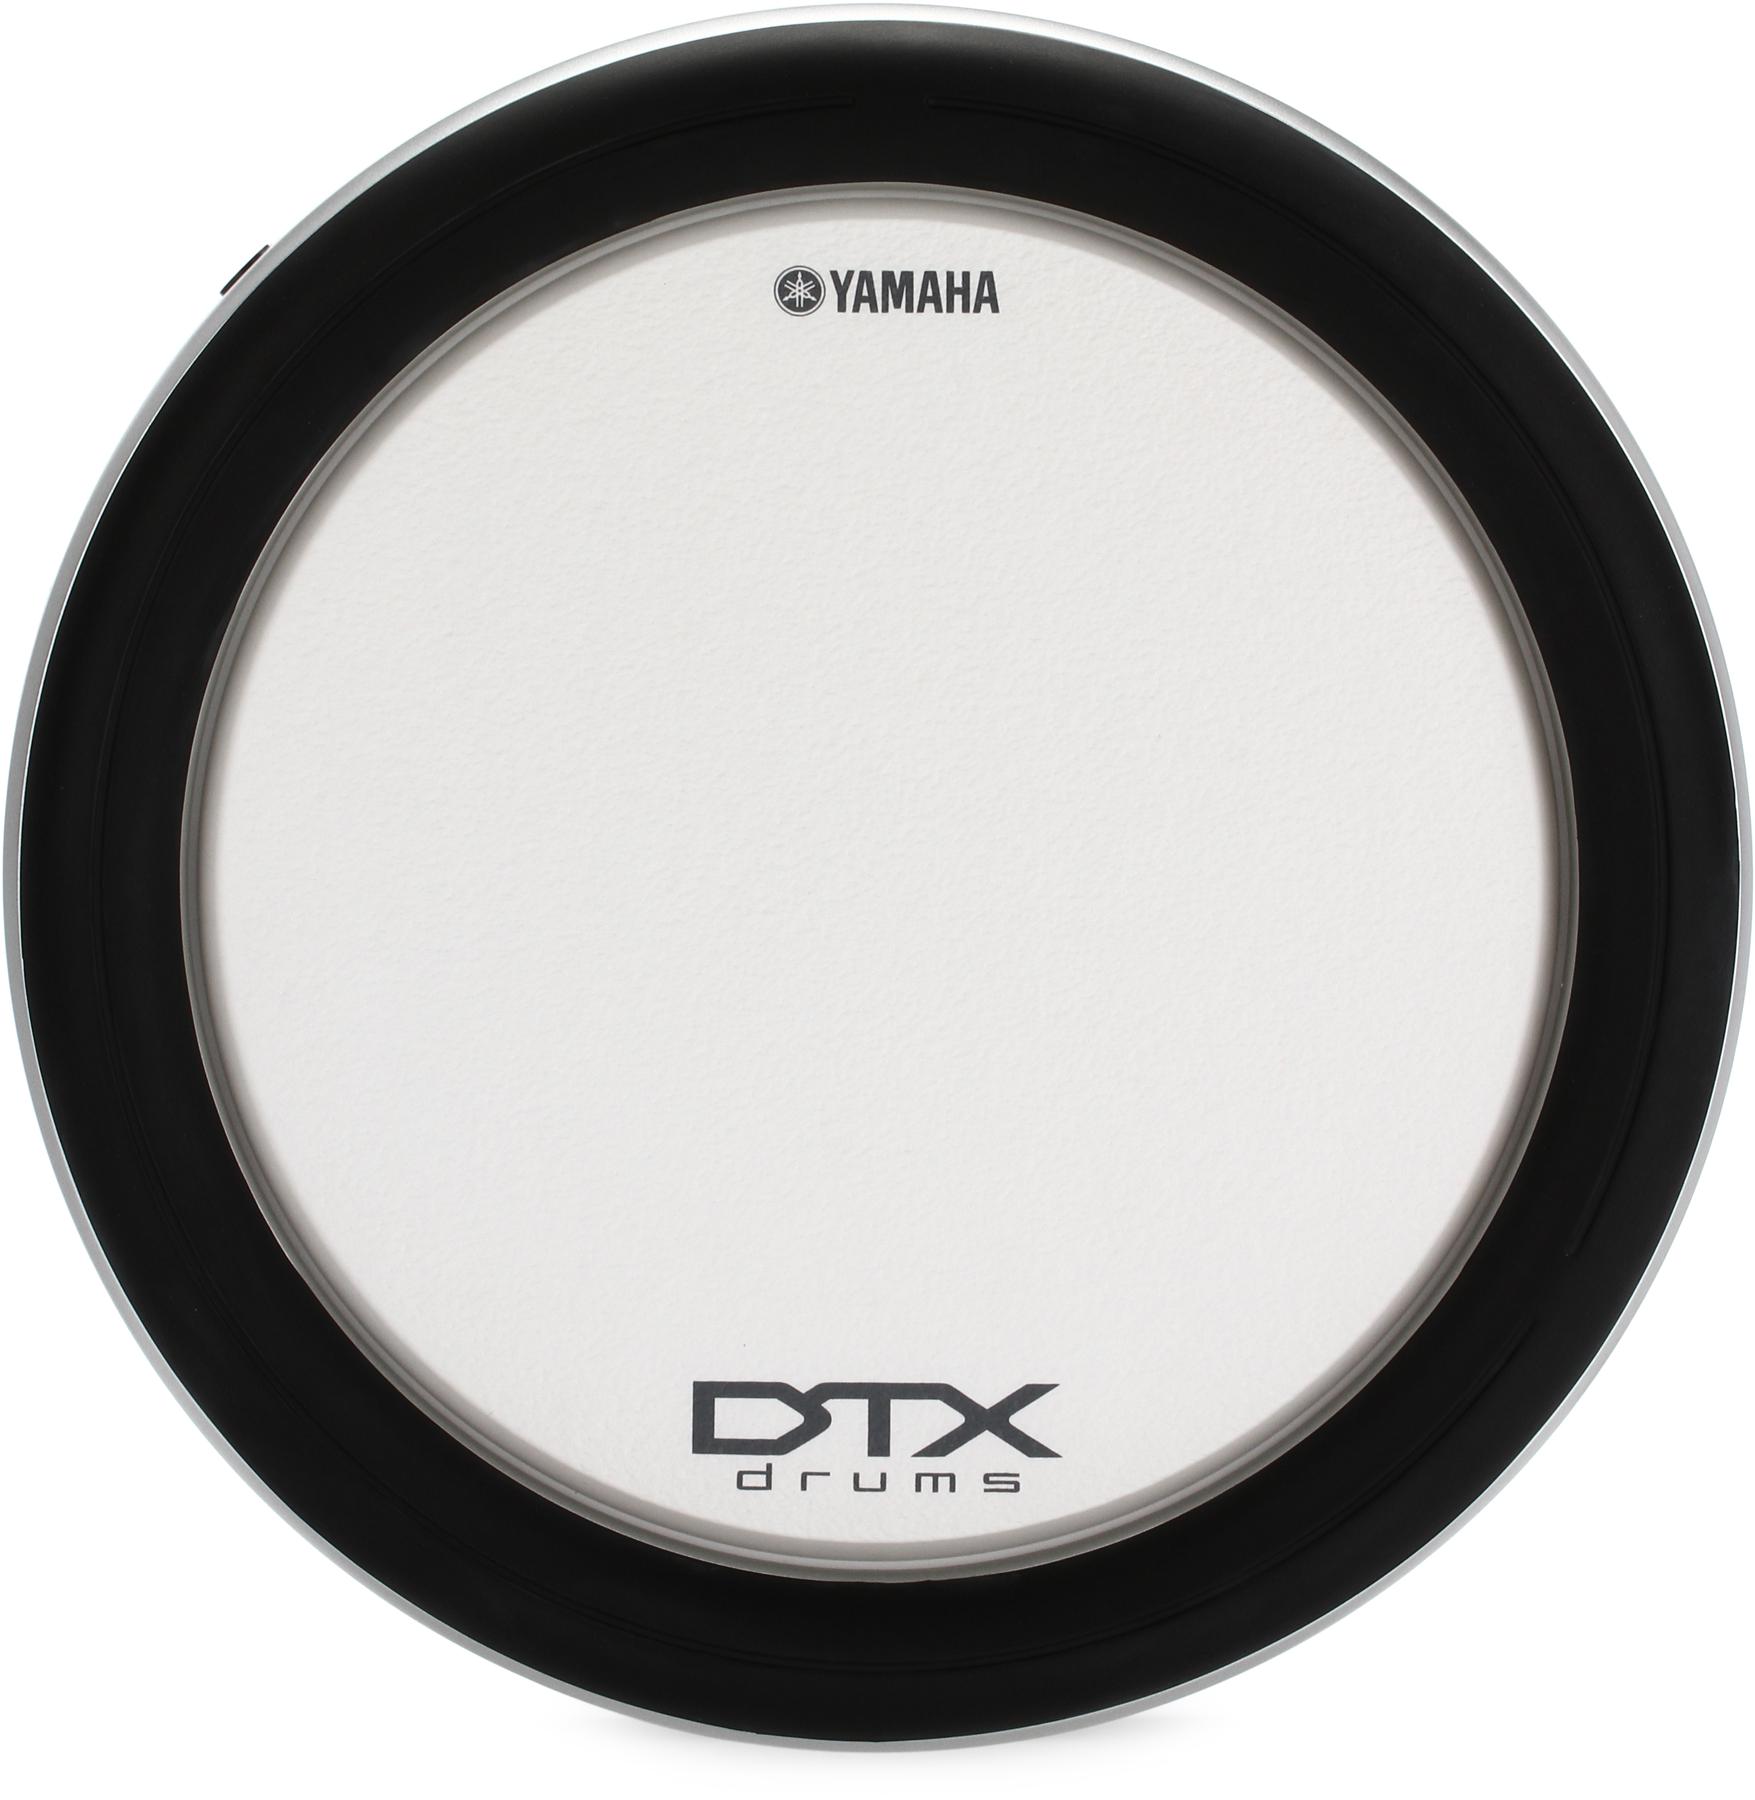 4. Yamaha DTX Series 3-Zone Drum Pad - 8"